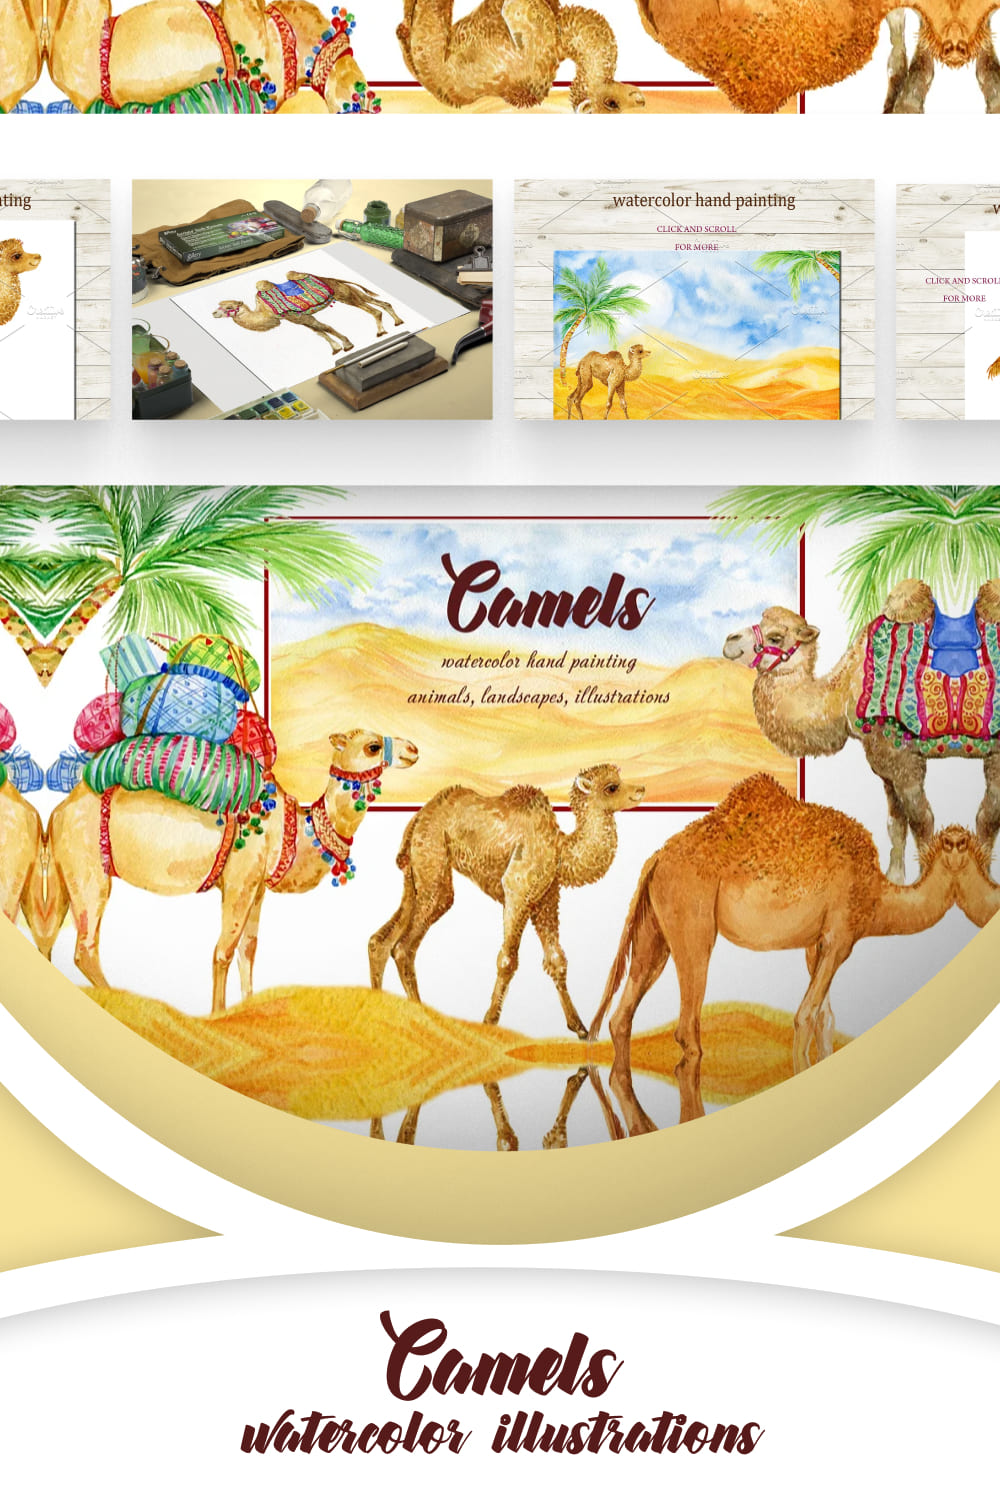 Life camels in a desert.